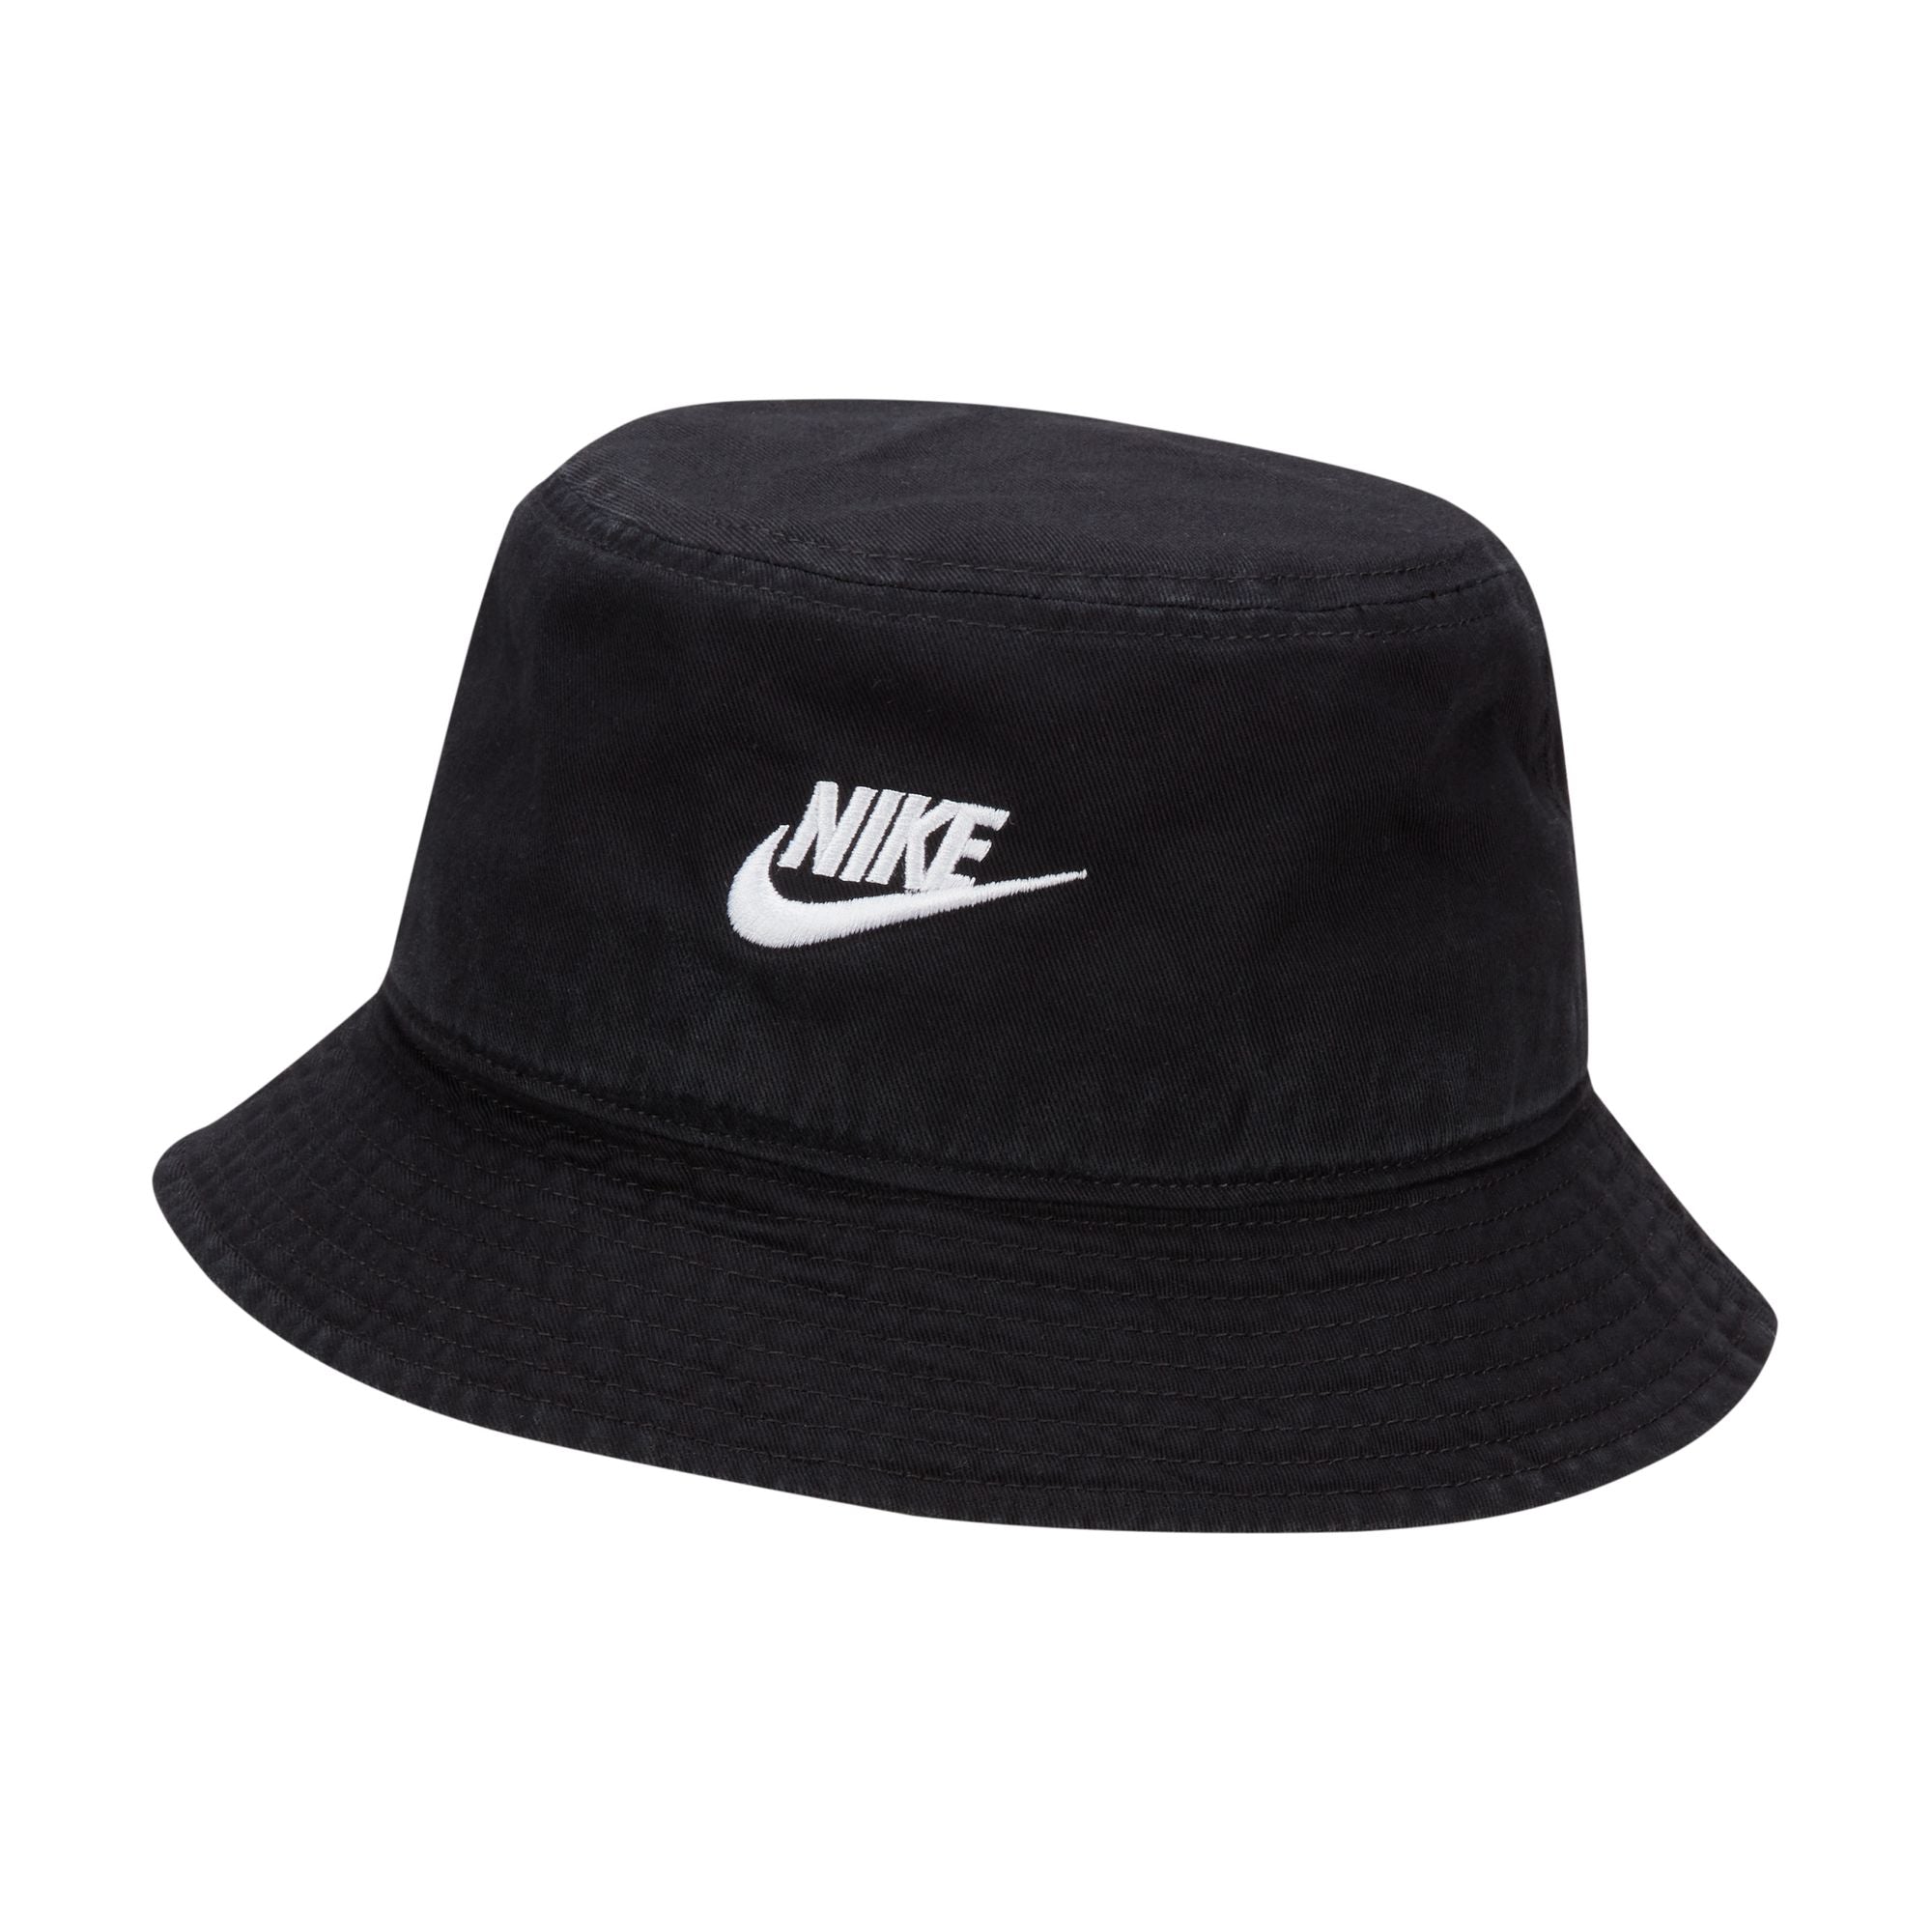 Nike Bucket Hat - Black/White